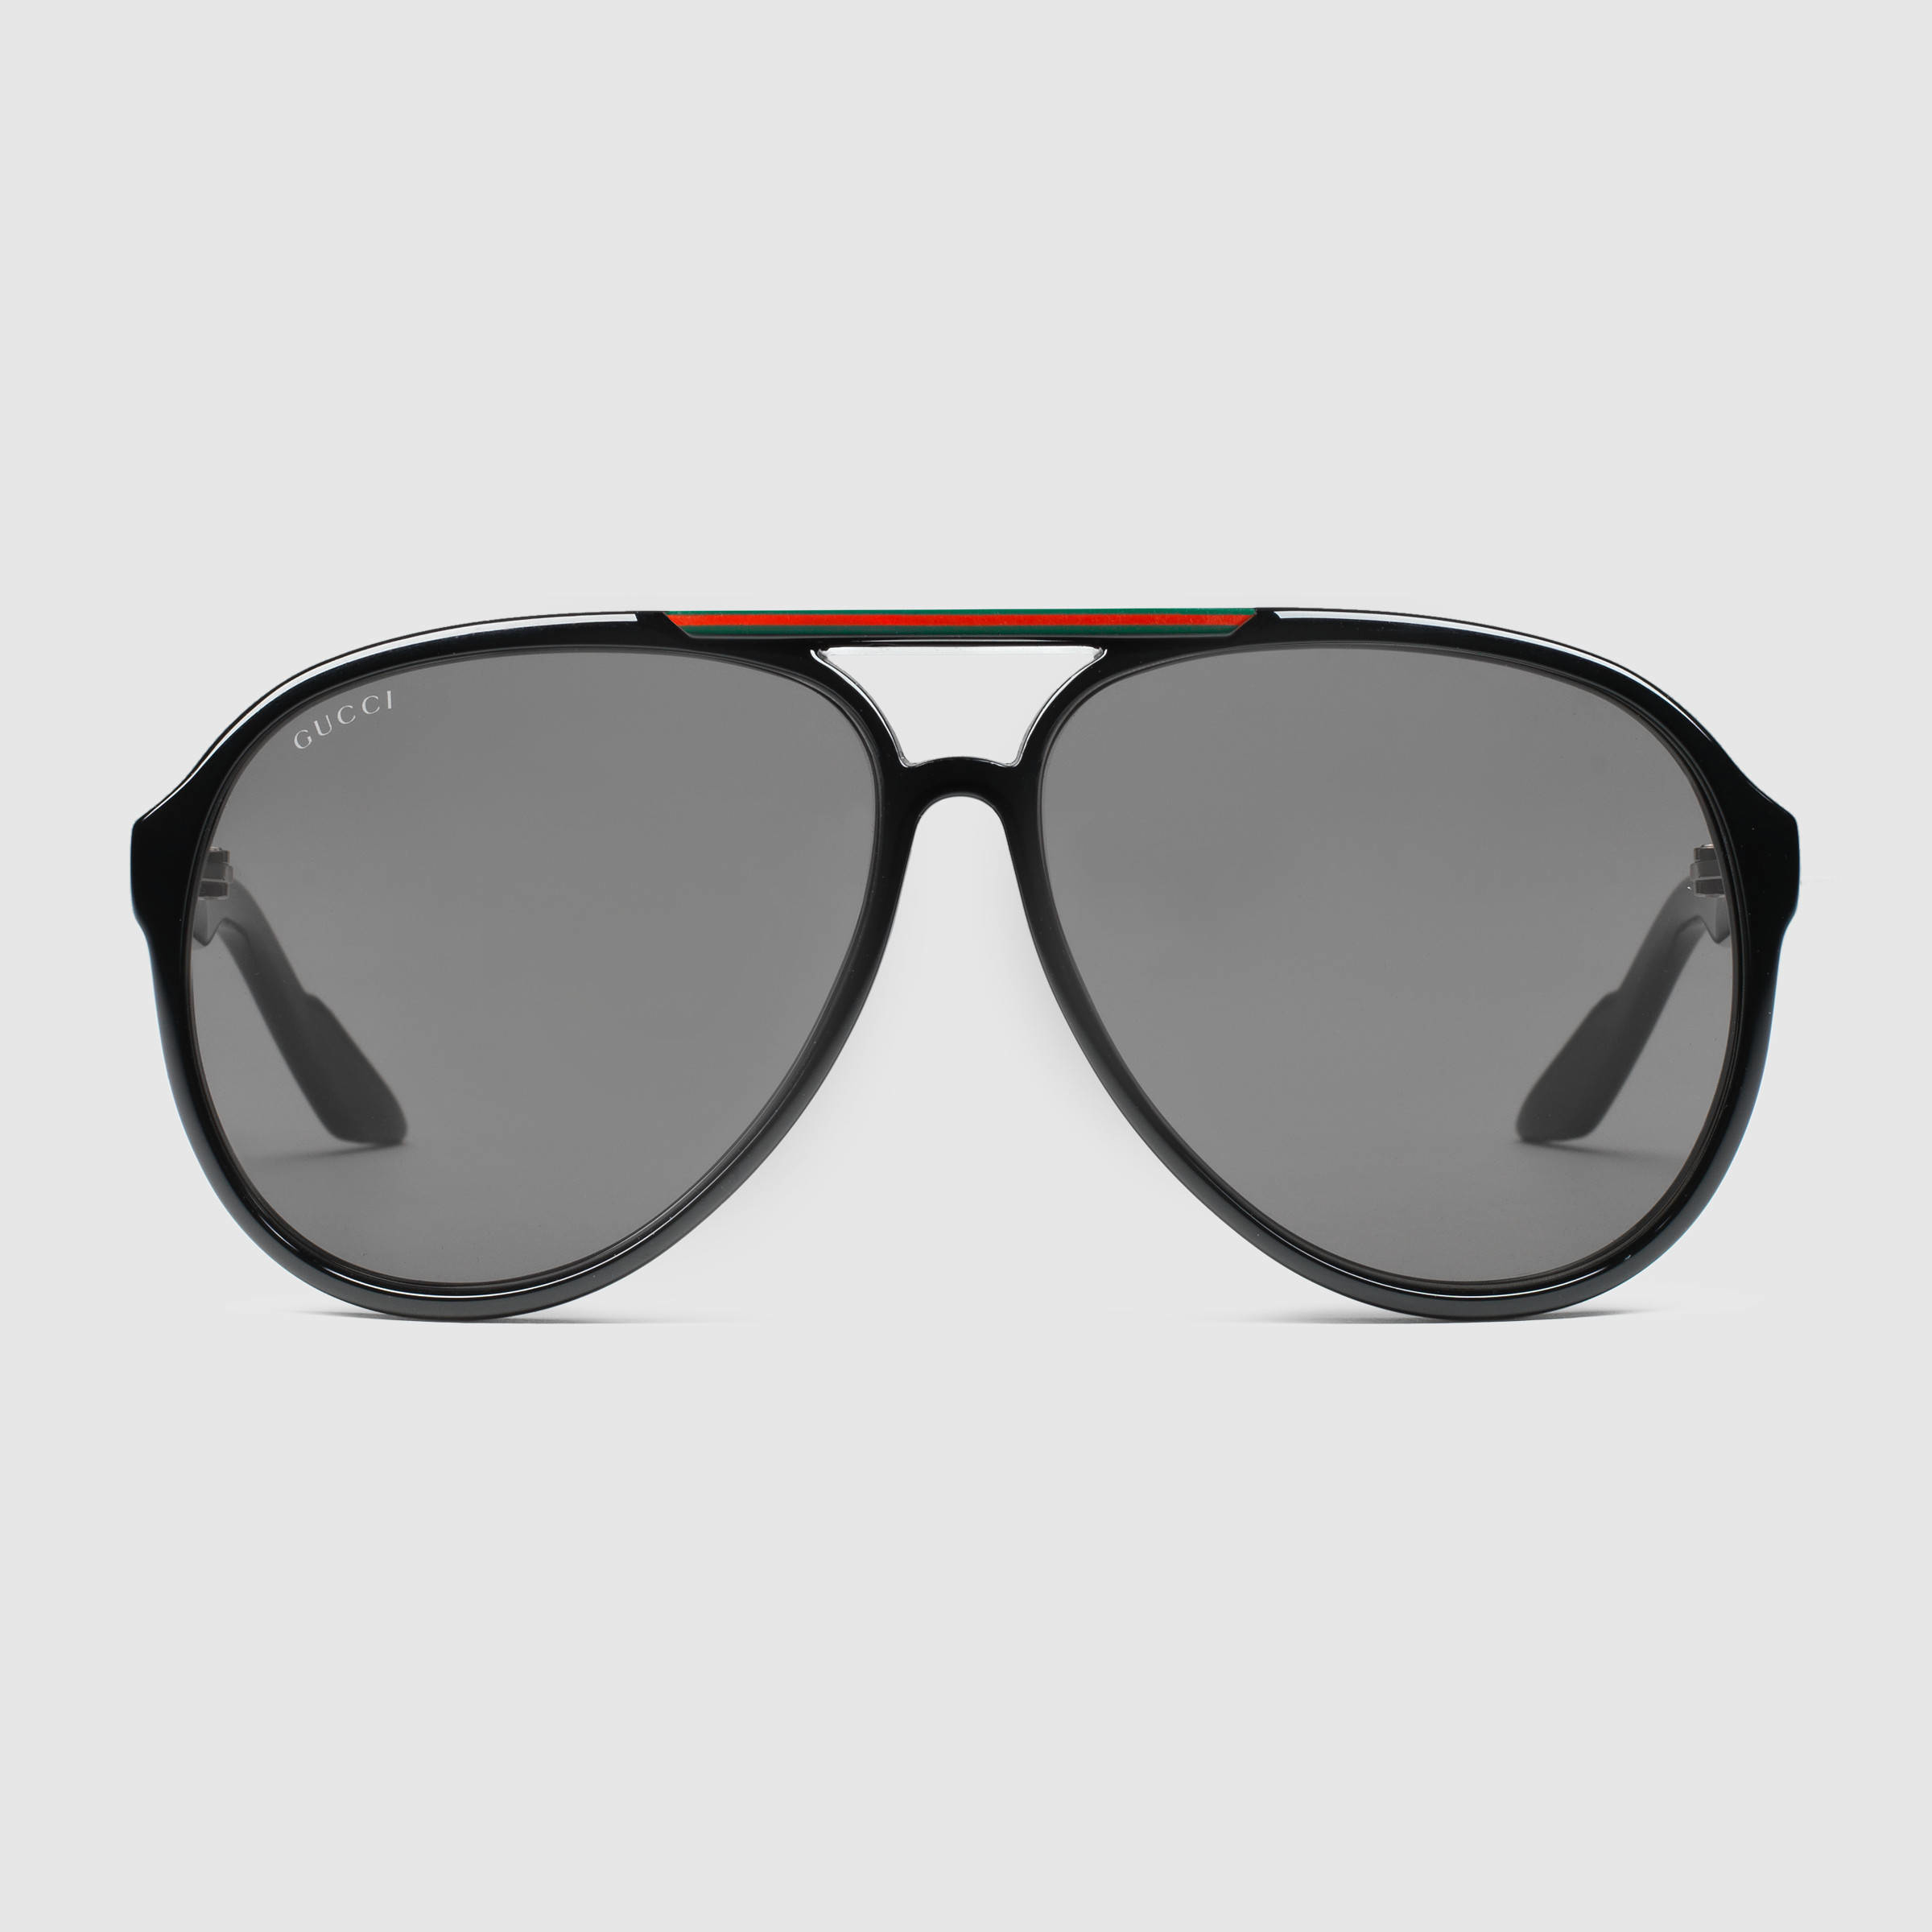 Lyst - Gucci Medium Aviator Sunglasses in Black for Men